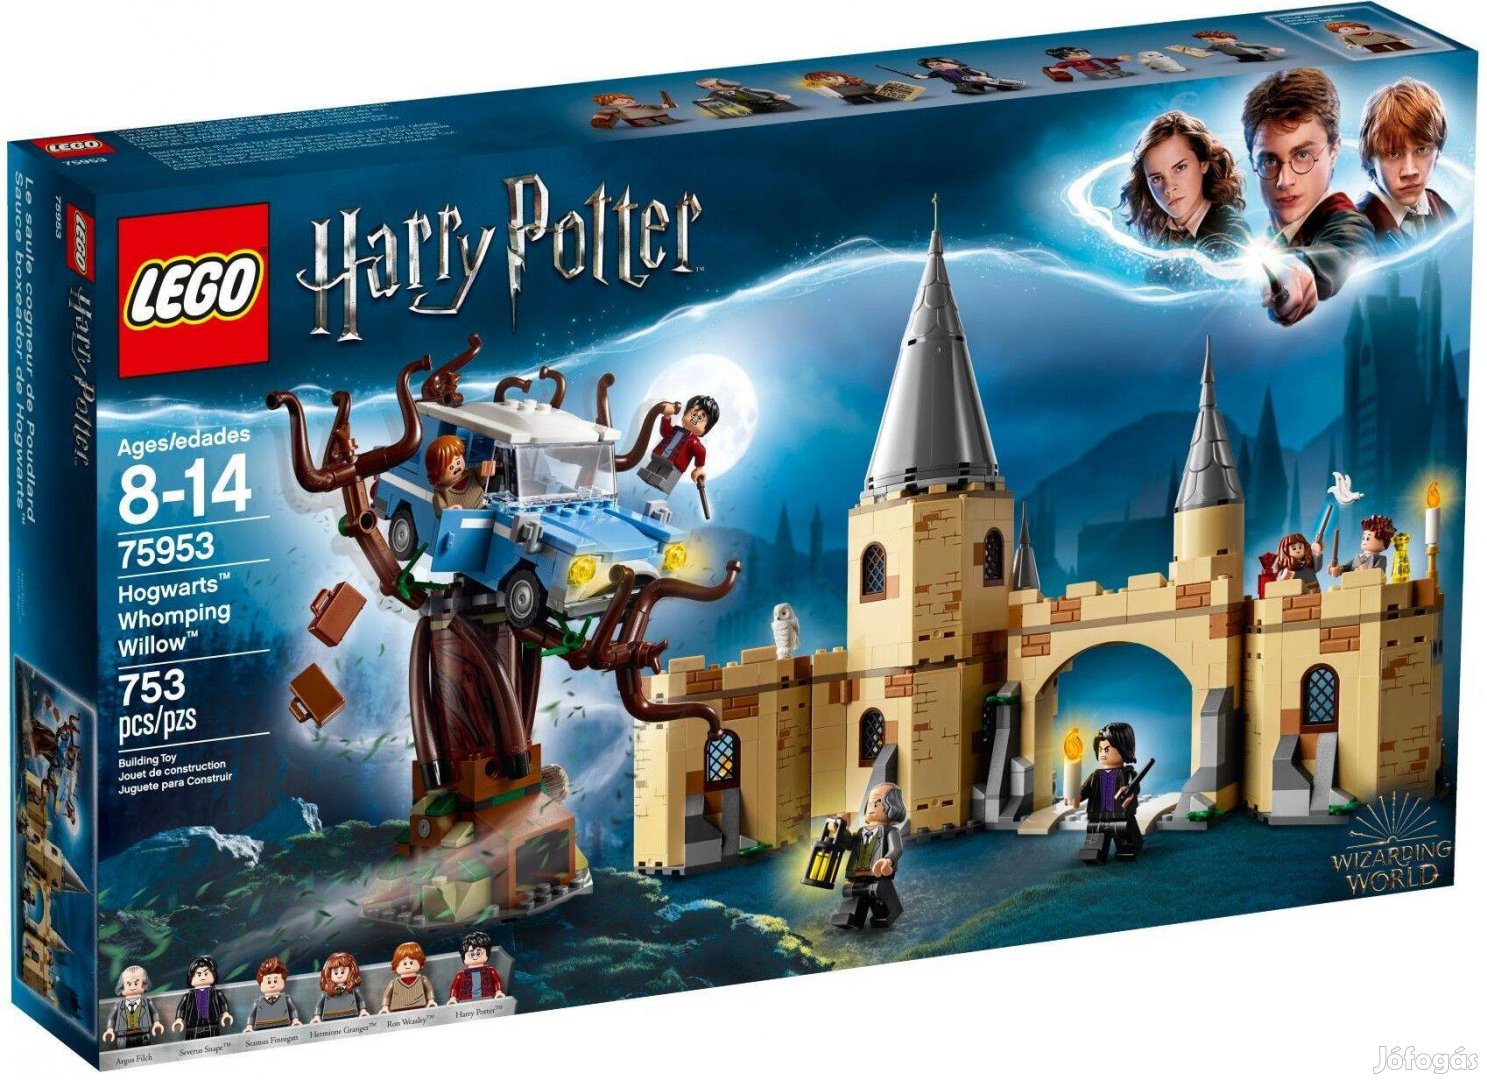 LEGO Harry Potter 75953 Hogwarts Whomping Willow bontatlan, új